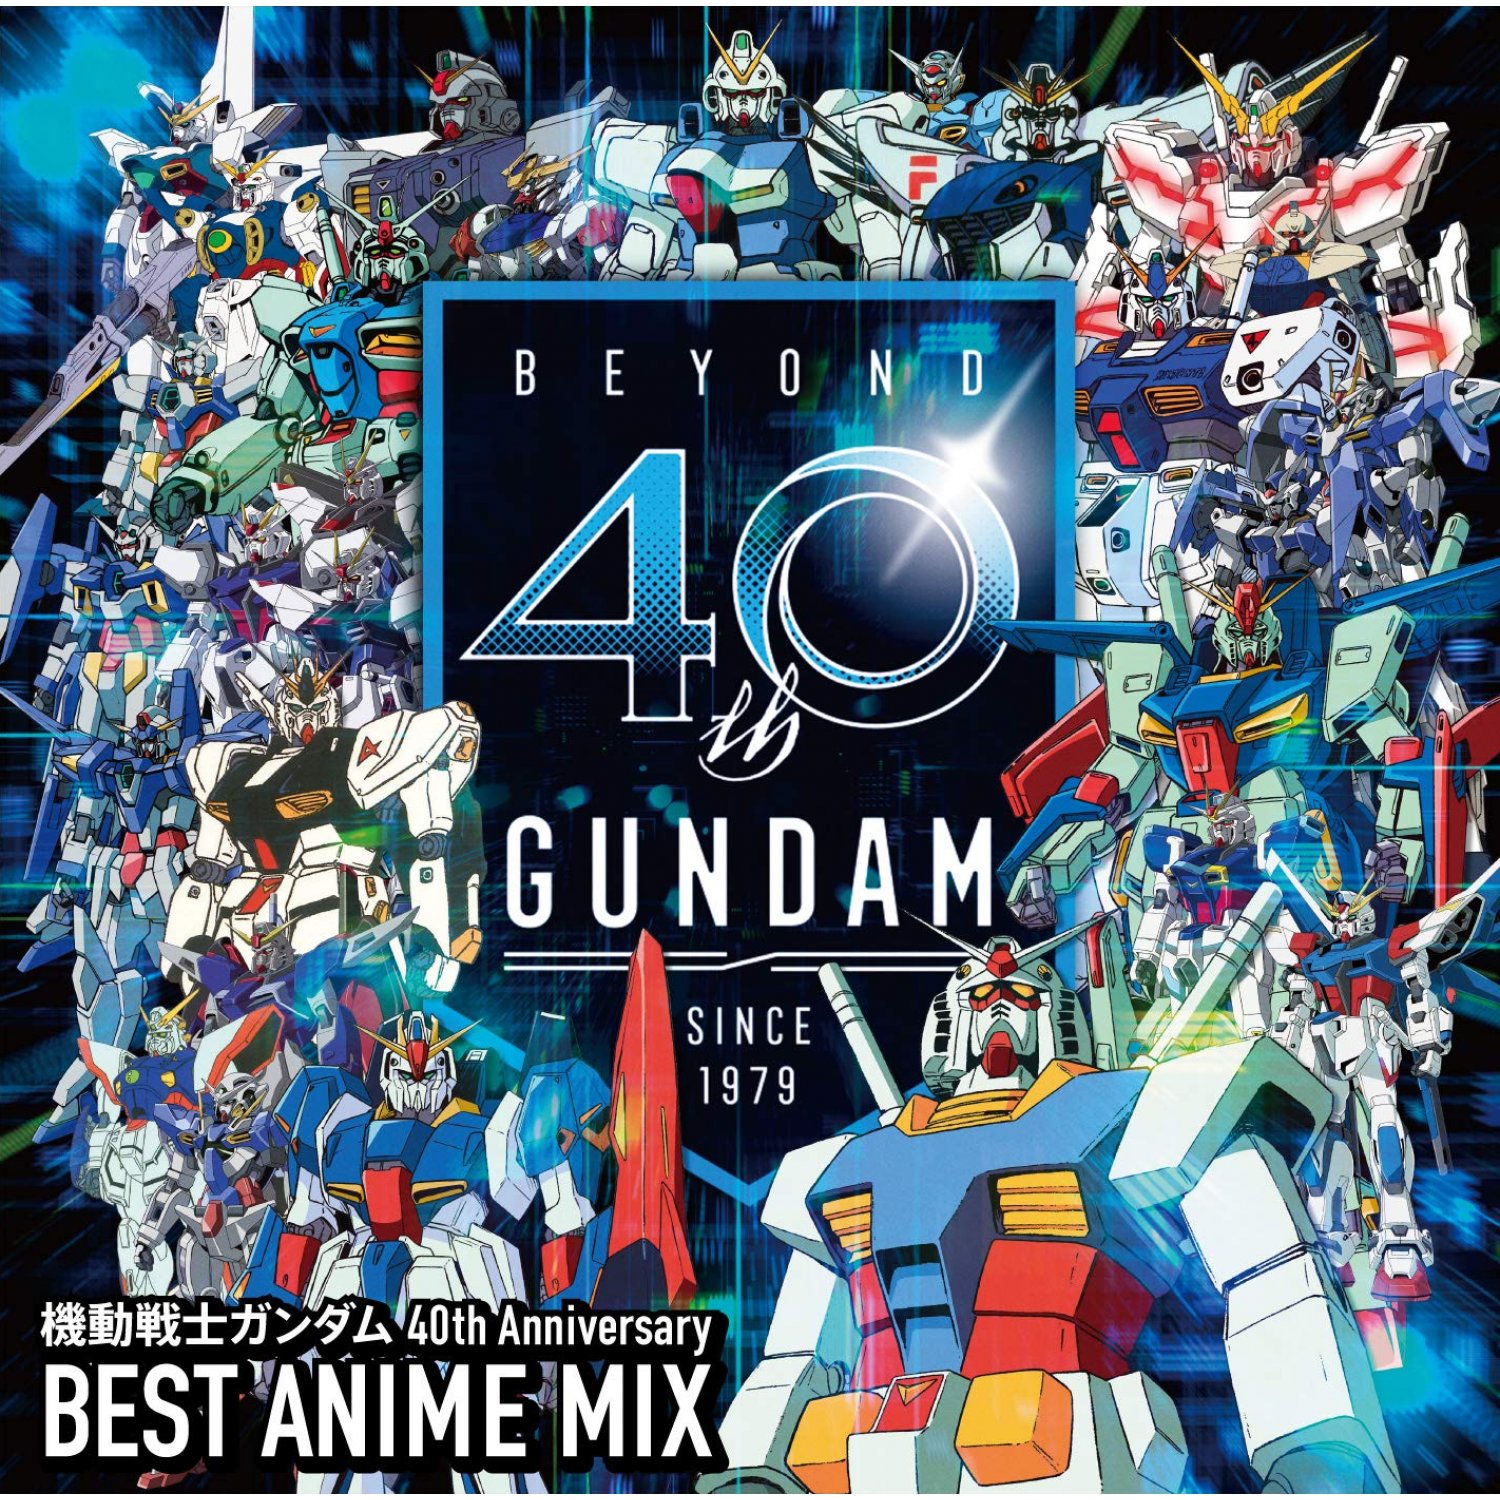 gundam-40th-anniversary-best-anime-mix-beyond-586125.1.jpg